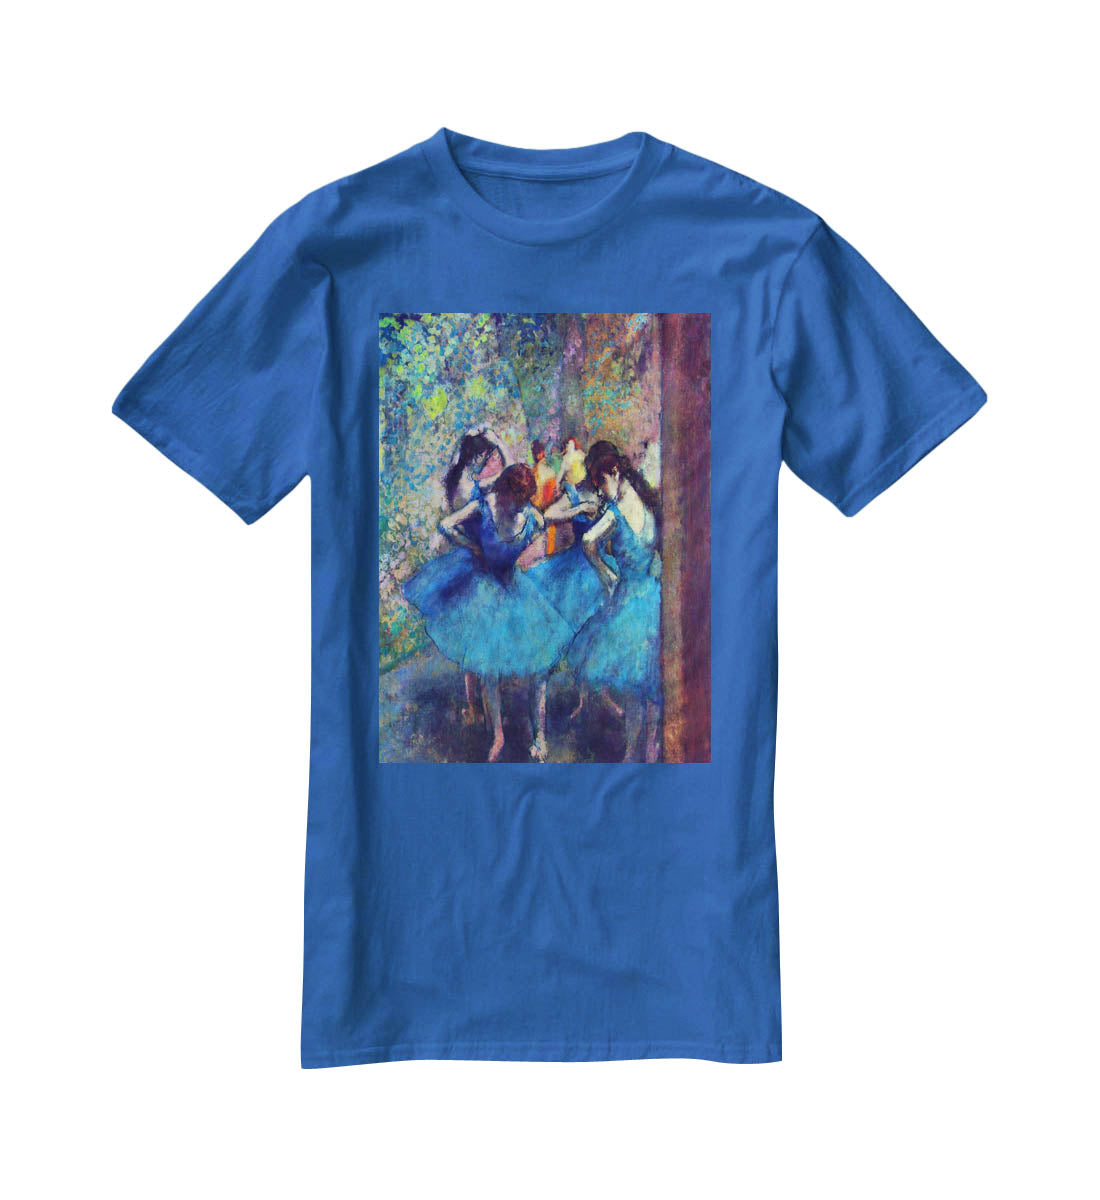 Dancers 1 by Degas T-Shirt - Canvas Art Rocks - 2